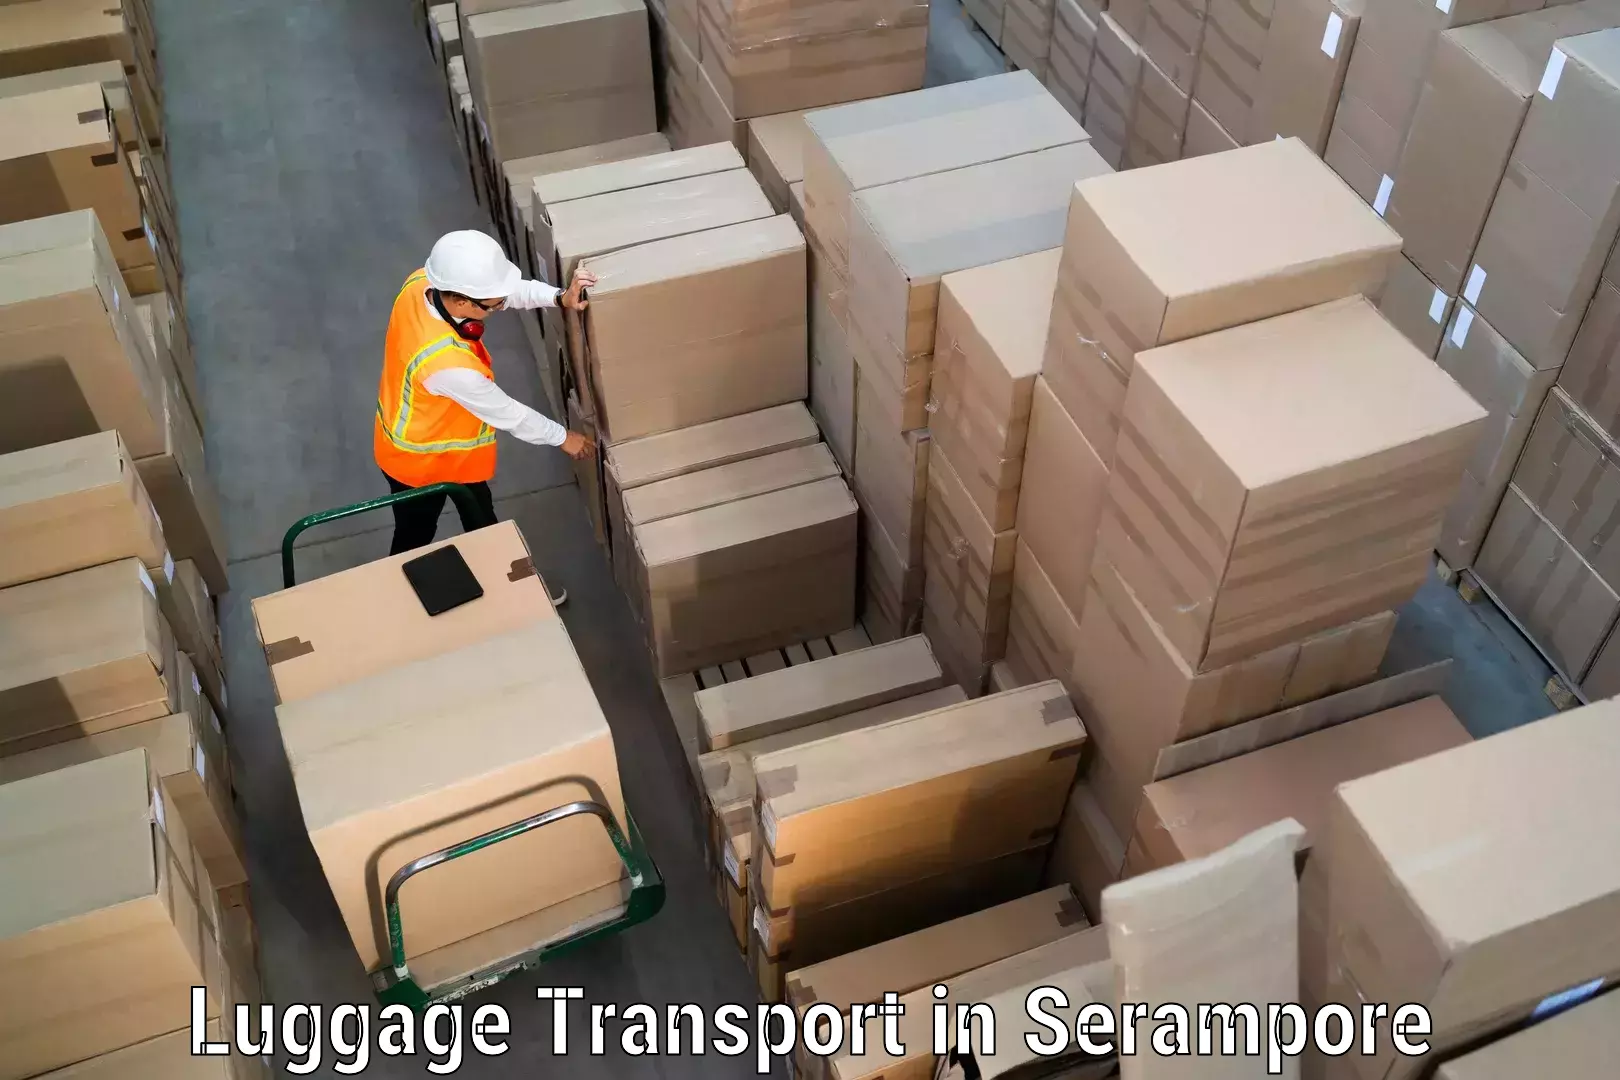 Luggage shipment tracking in Serampore